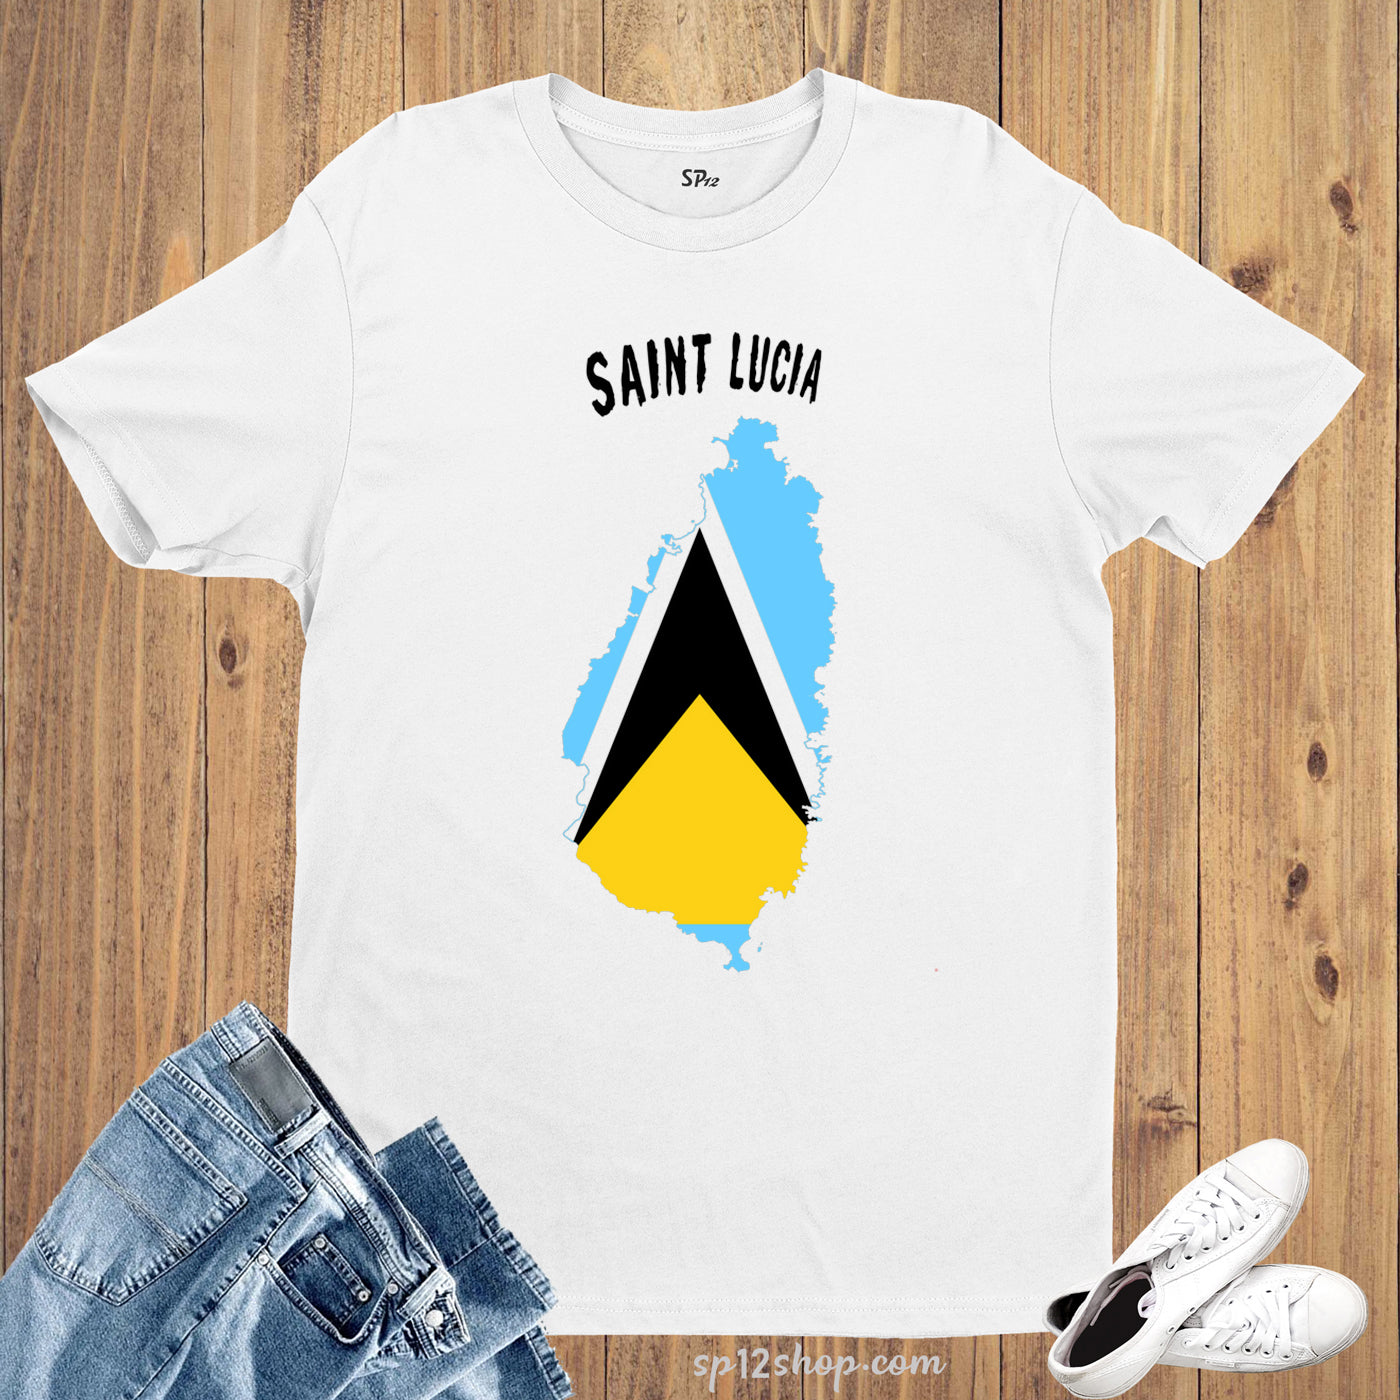 Saint Kitts and Nevis Flag T Shirt Olympics FIFA World Cup Country Flag Tee Shirt